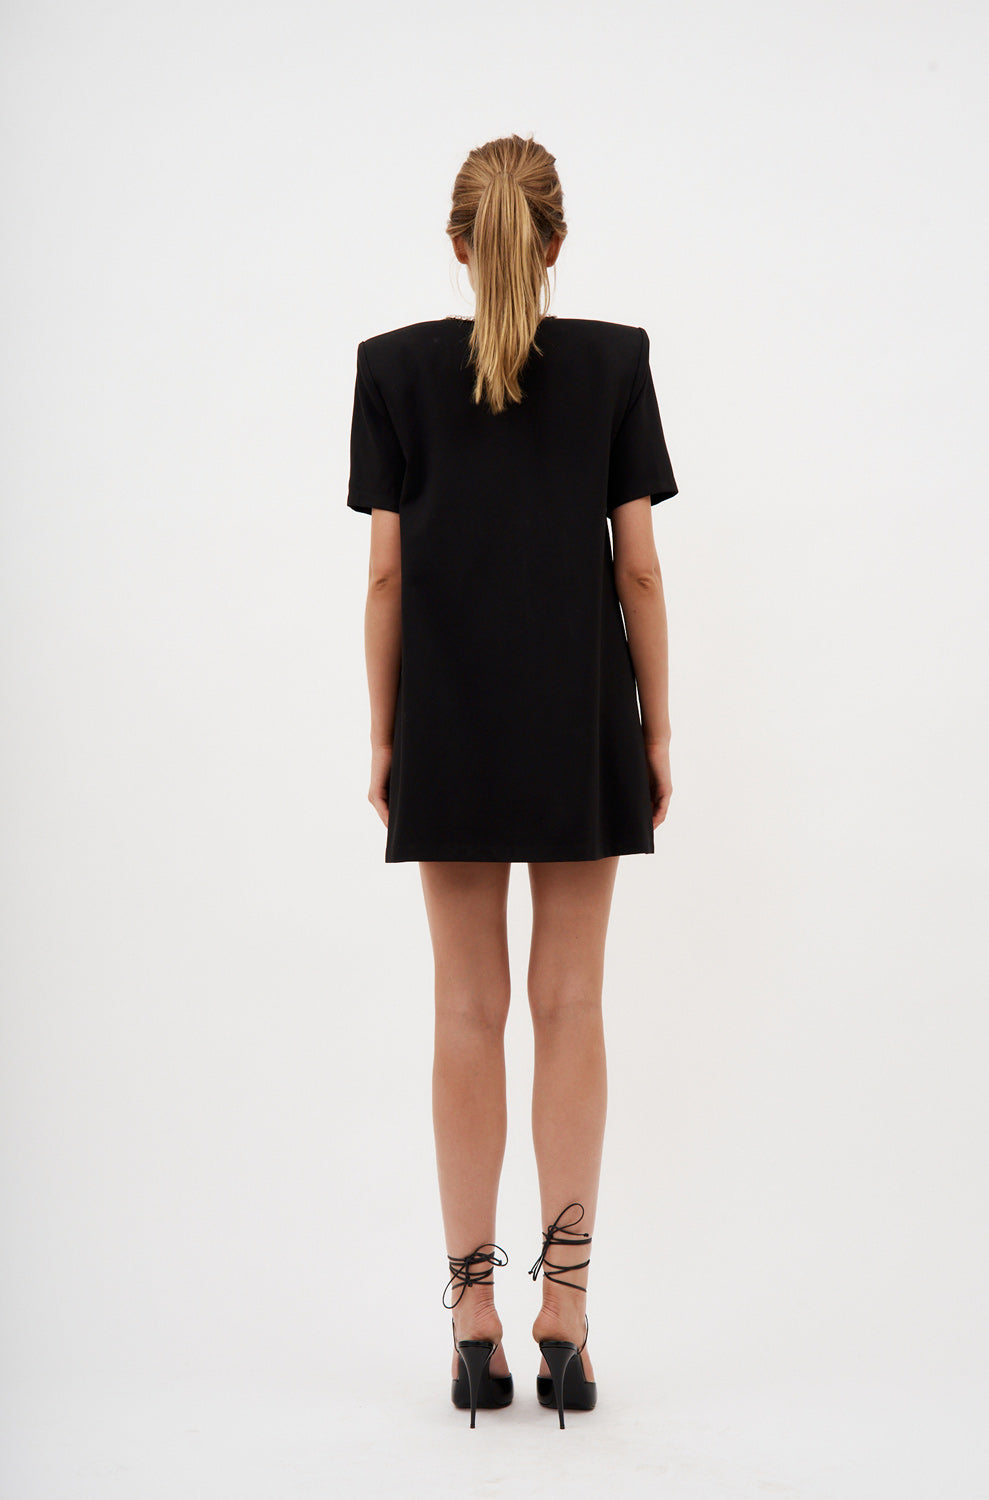 Crystal Bow V-Neck Black T-Shirt Dress